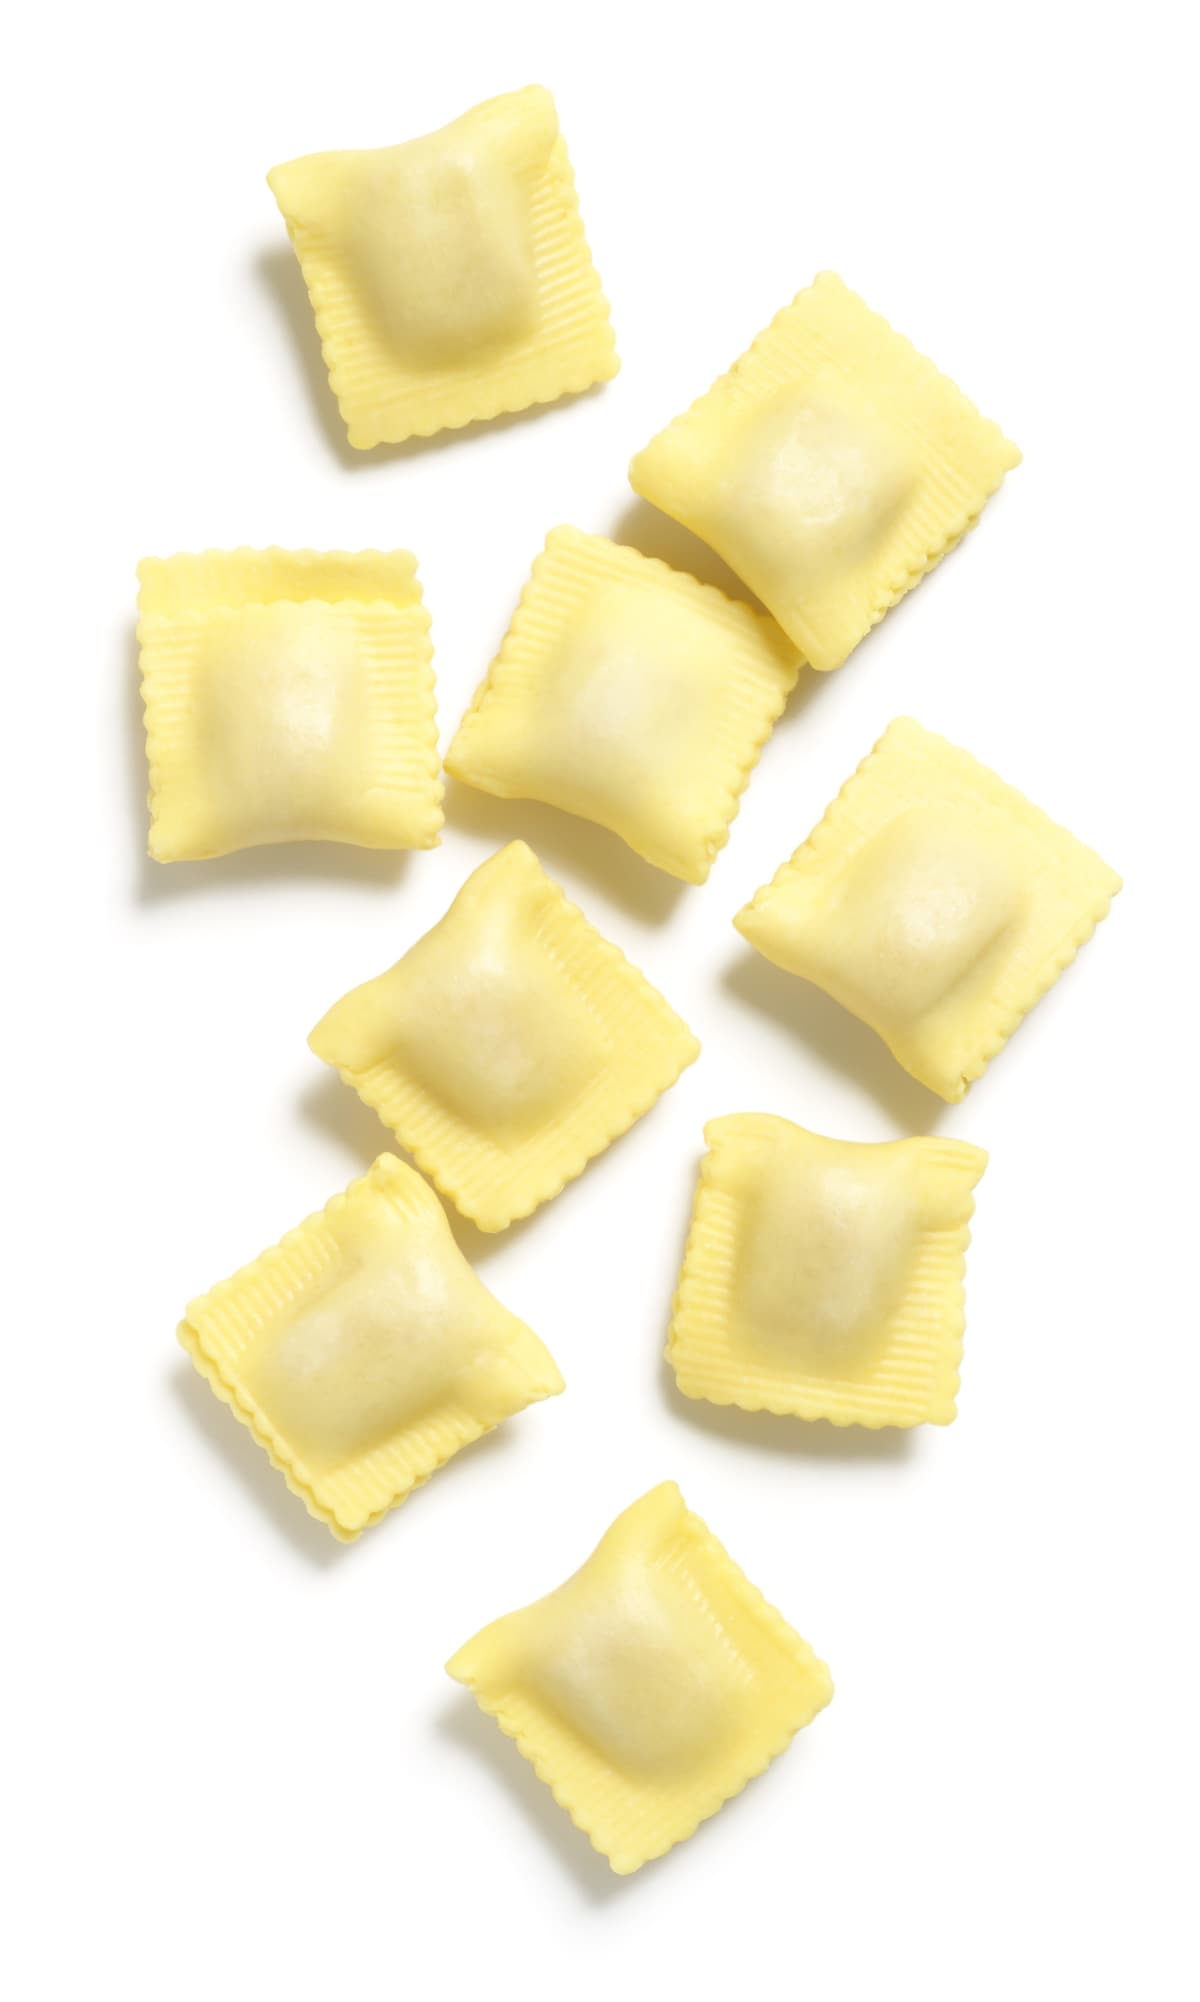 Dry ravioli pasta stuffed with squash isolated on 255 white.